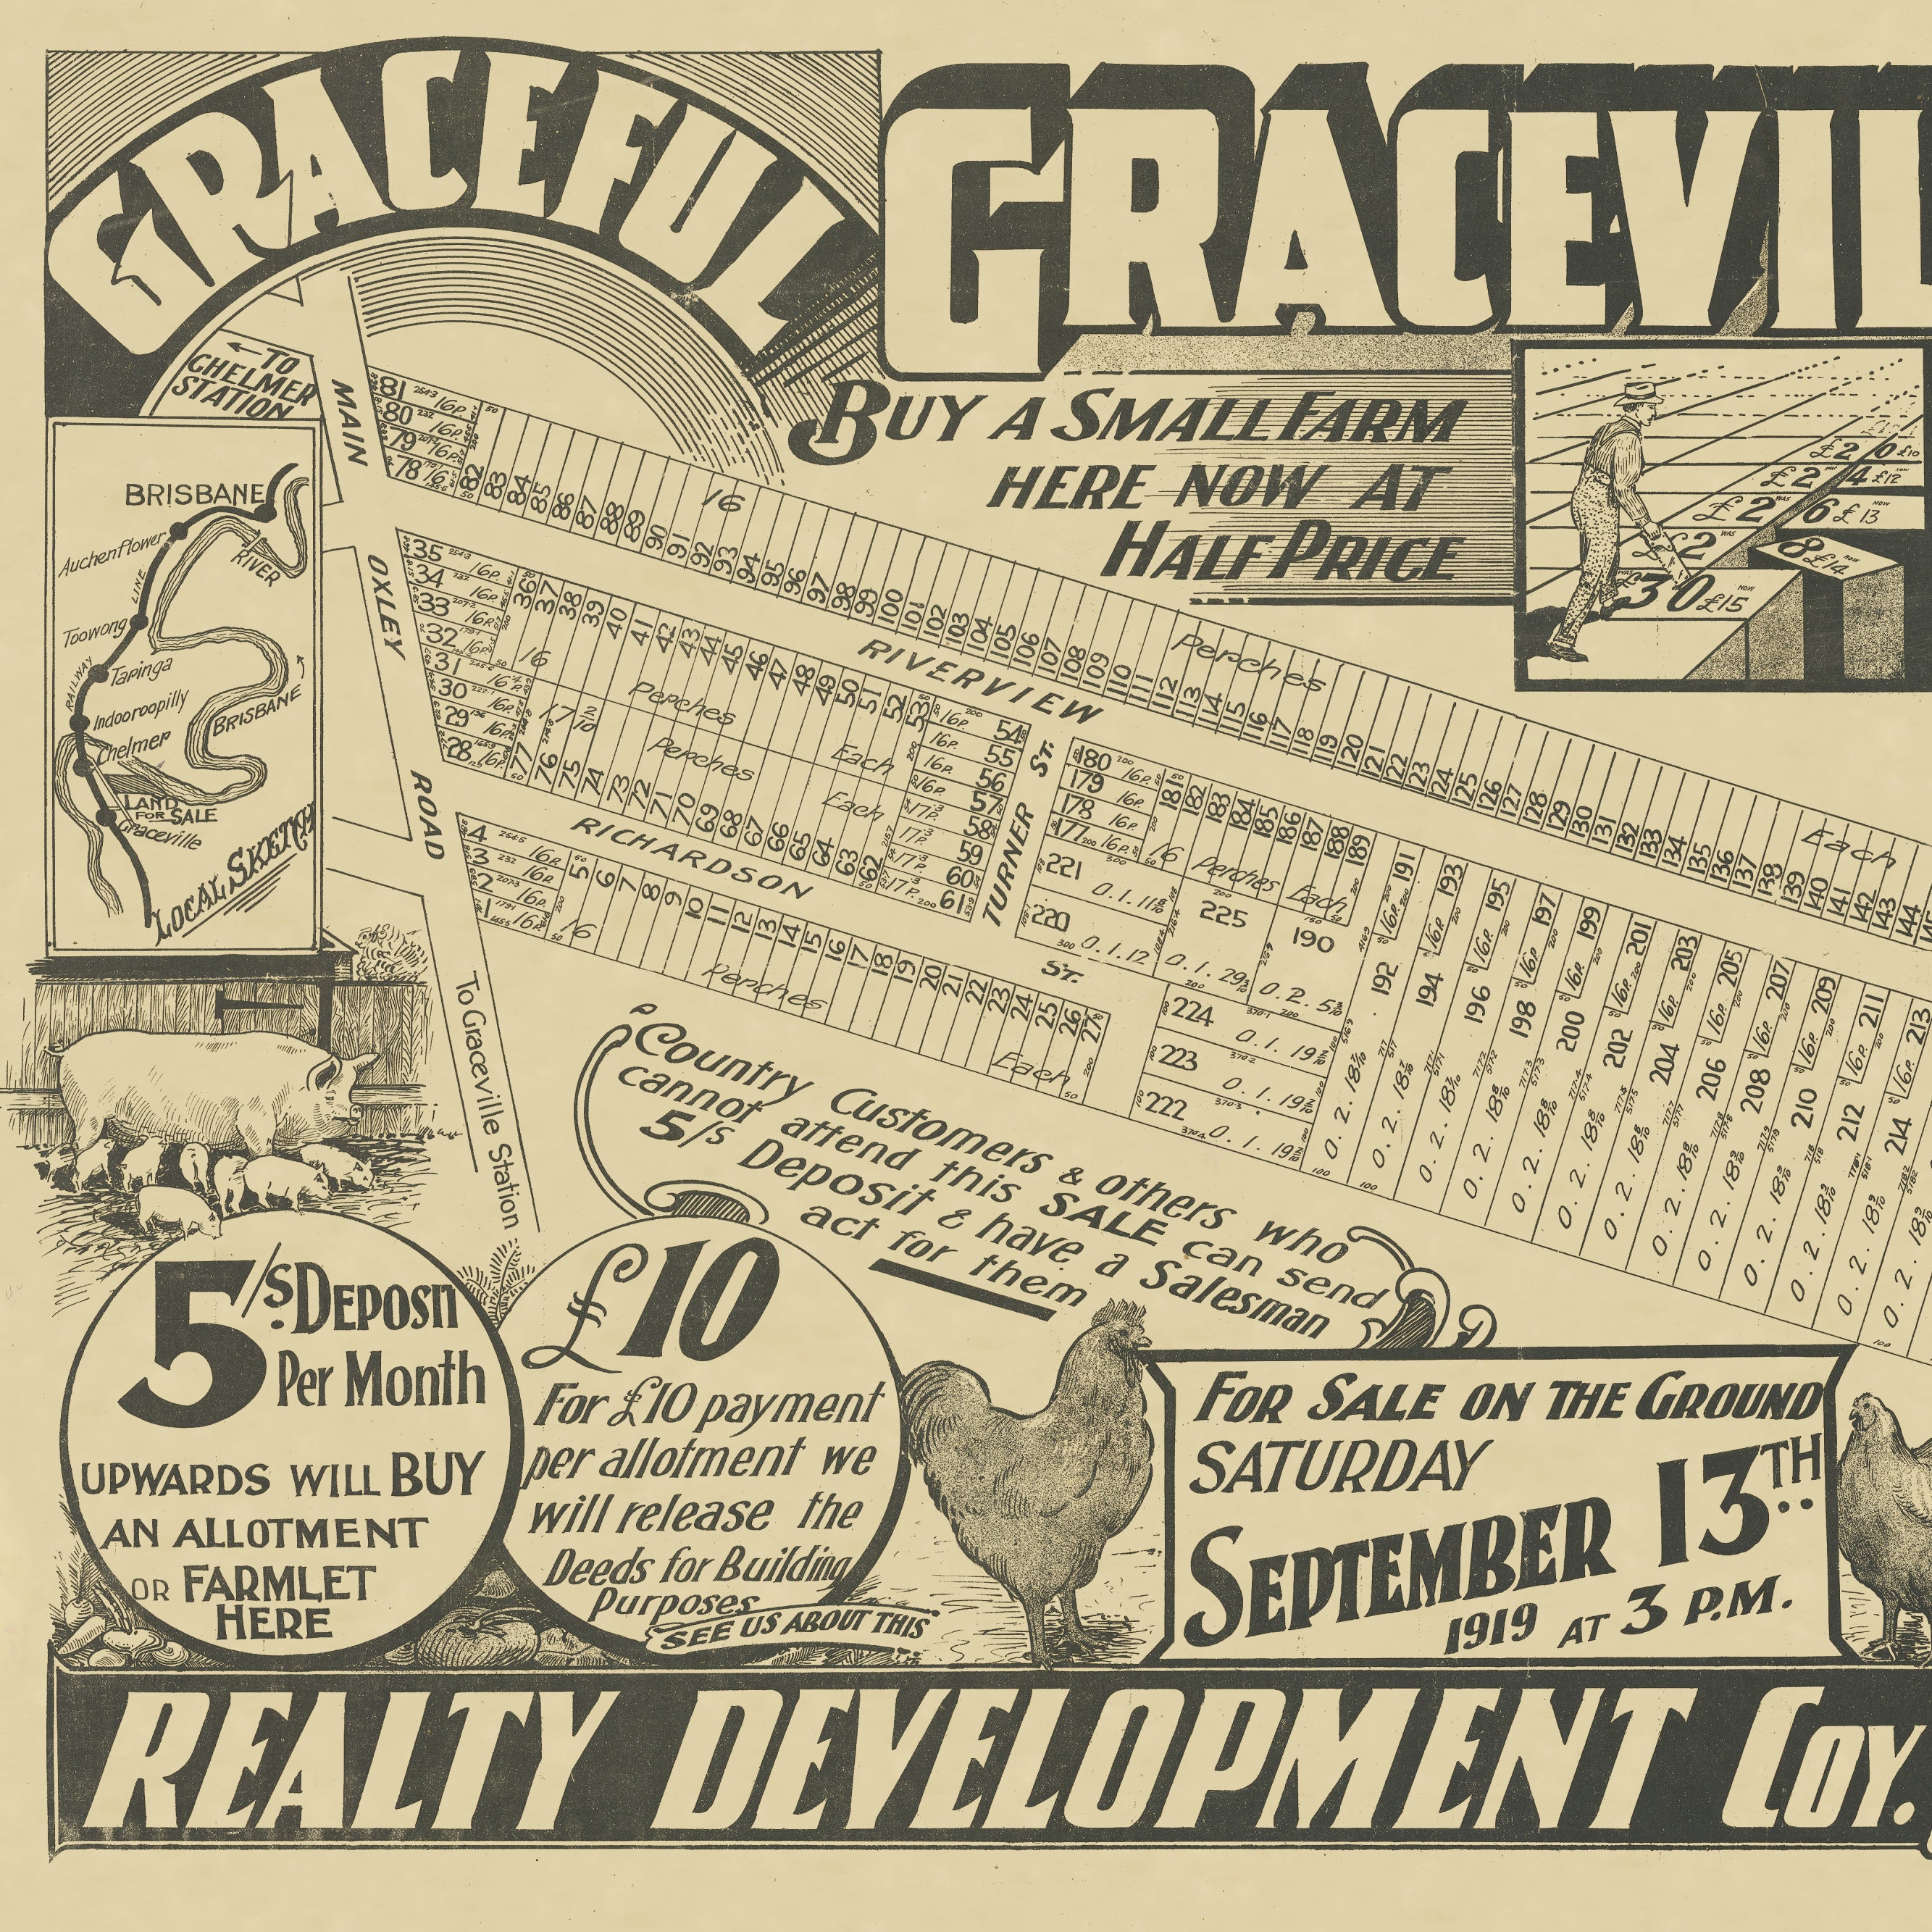 1919 Chelmer - Graceful Graceville Park